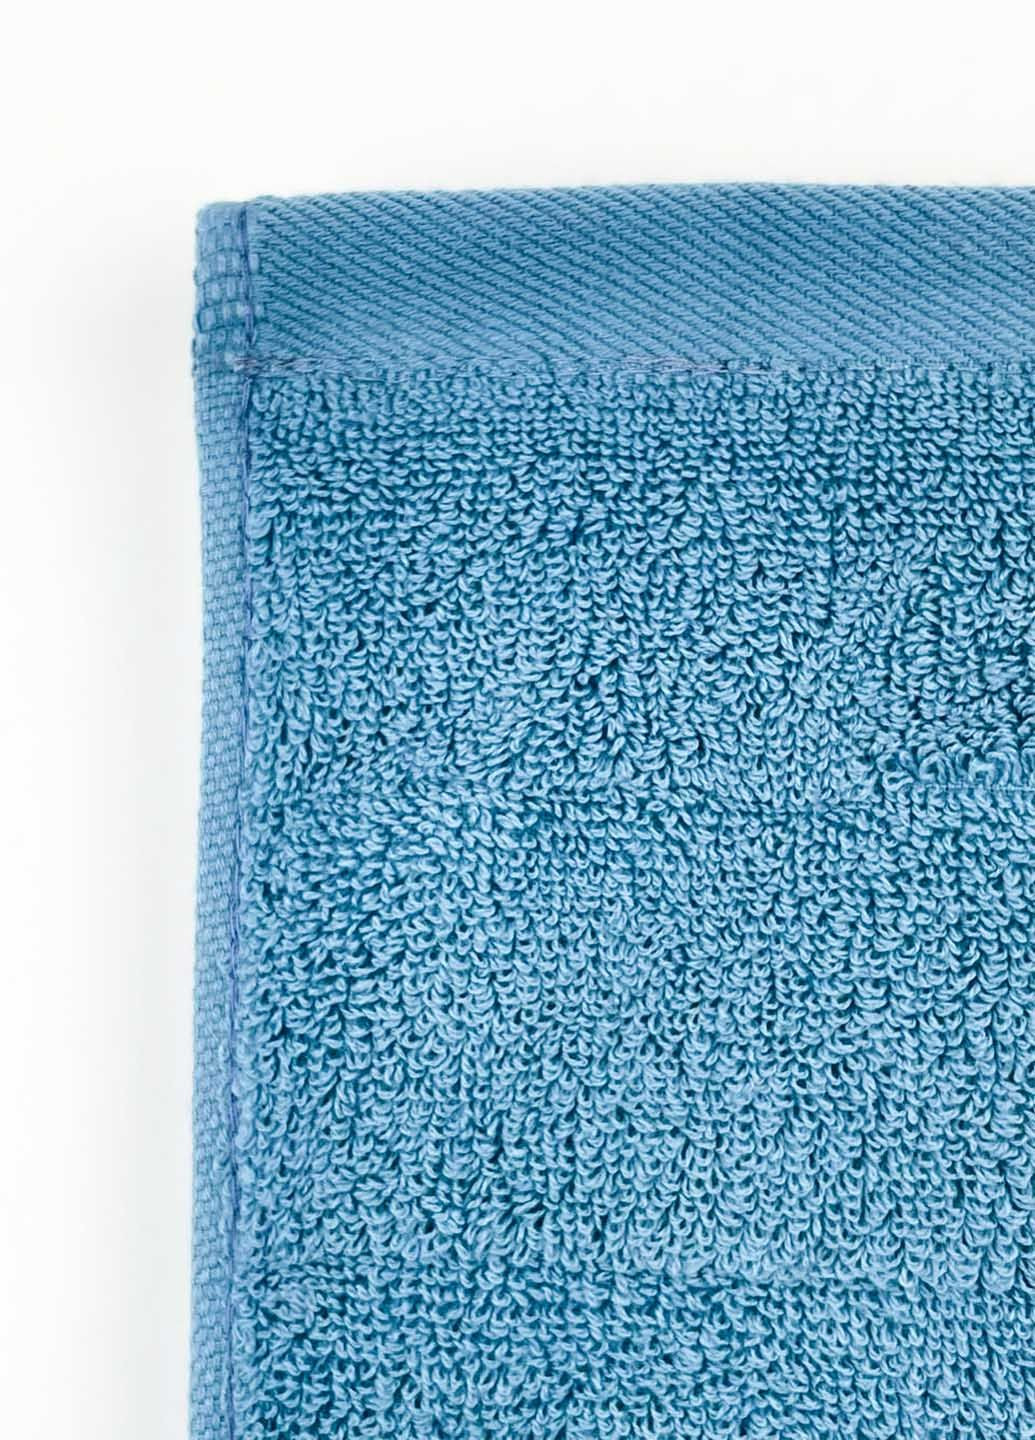 Homedec полотенце банное махровое 140х70 см полоска синий производство - Турция